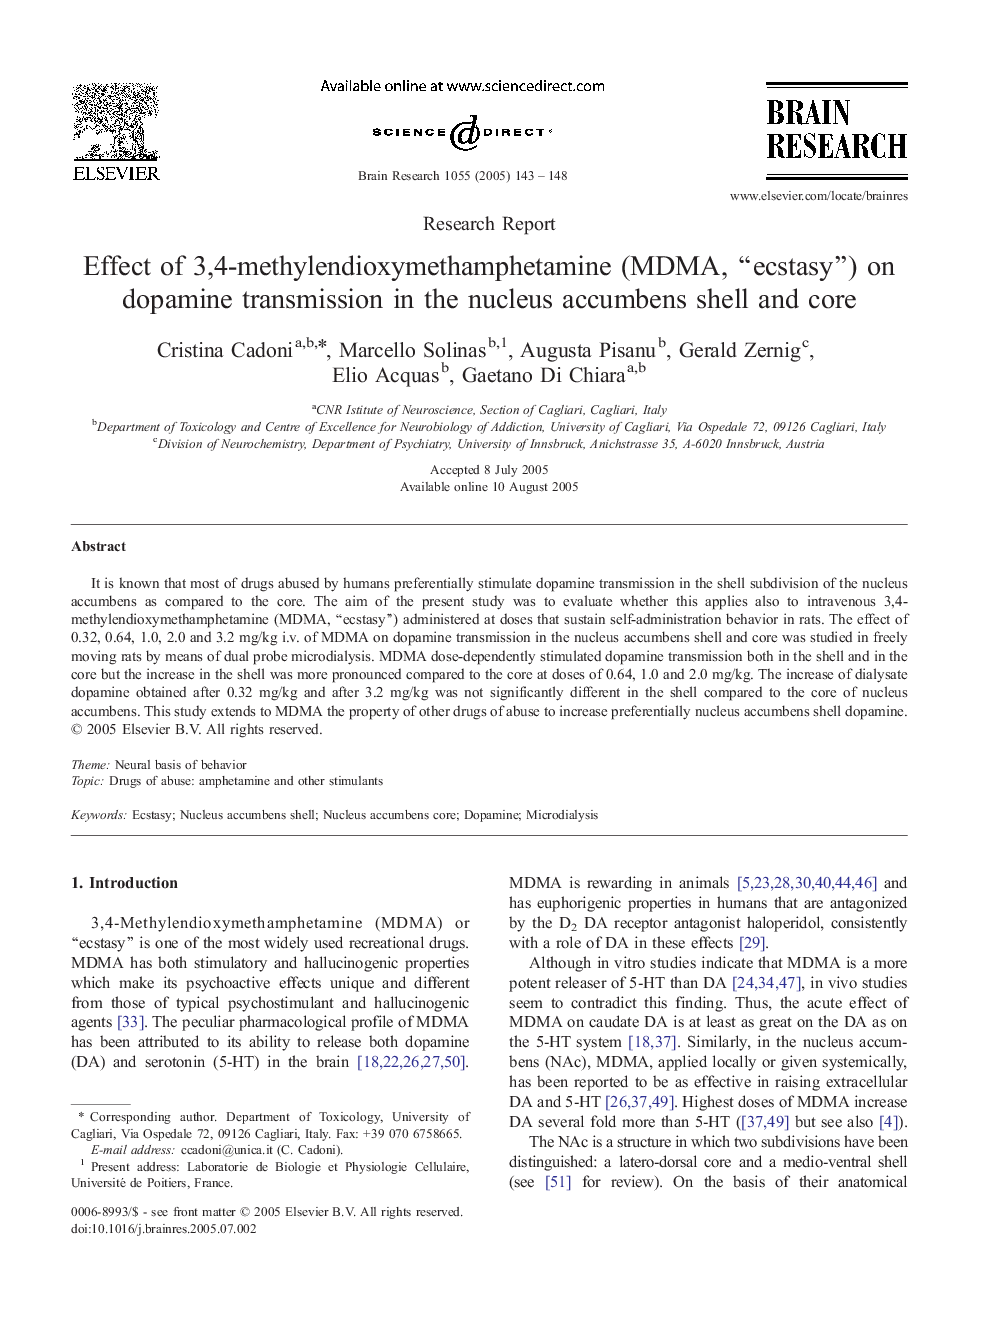 Effect of 3,4-methylendioxymethamphetamine (MDMA, “ecstasy”) on dopamine transmission in the nucleus accumbens shell and core